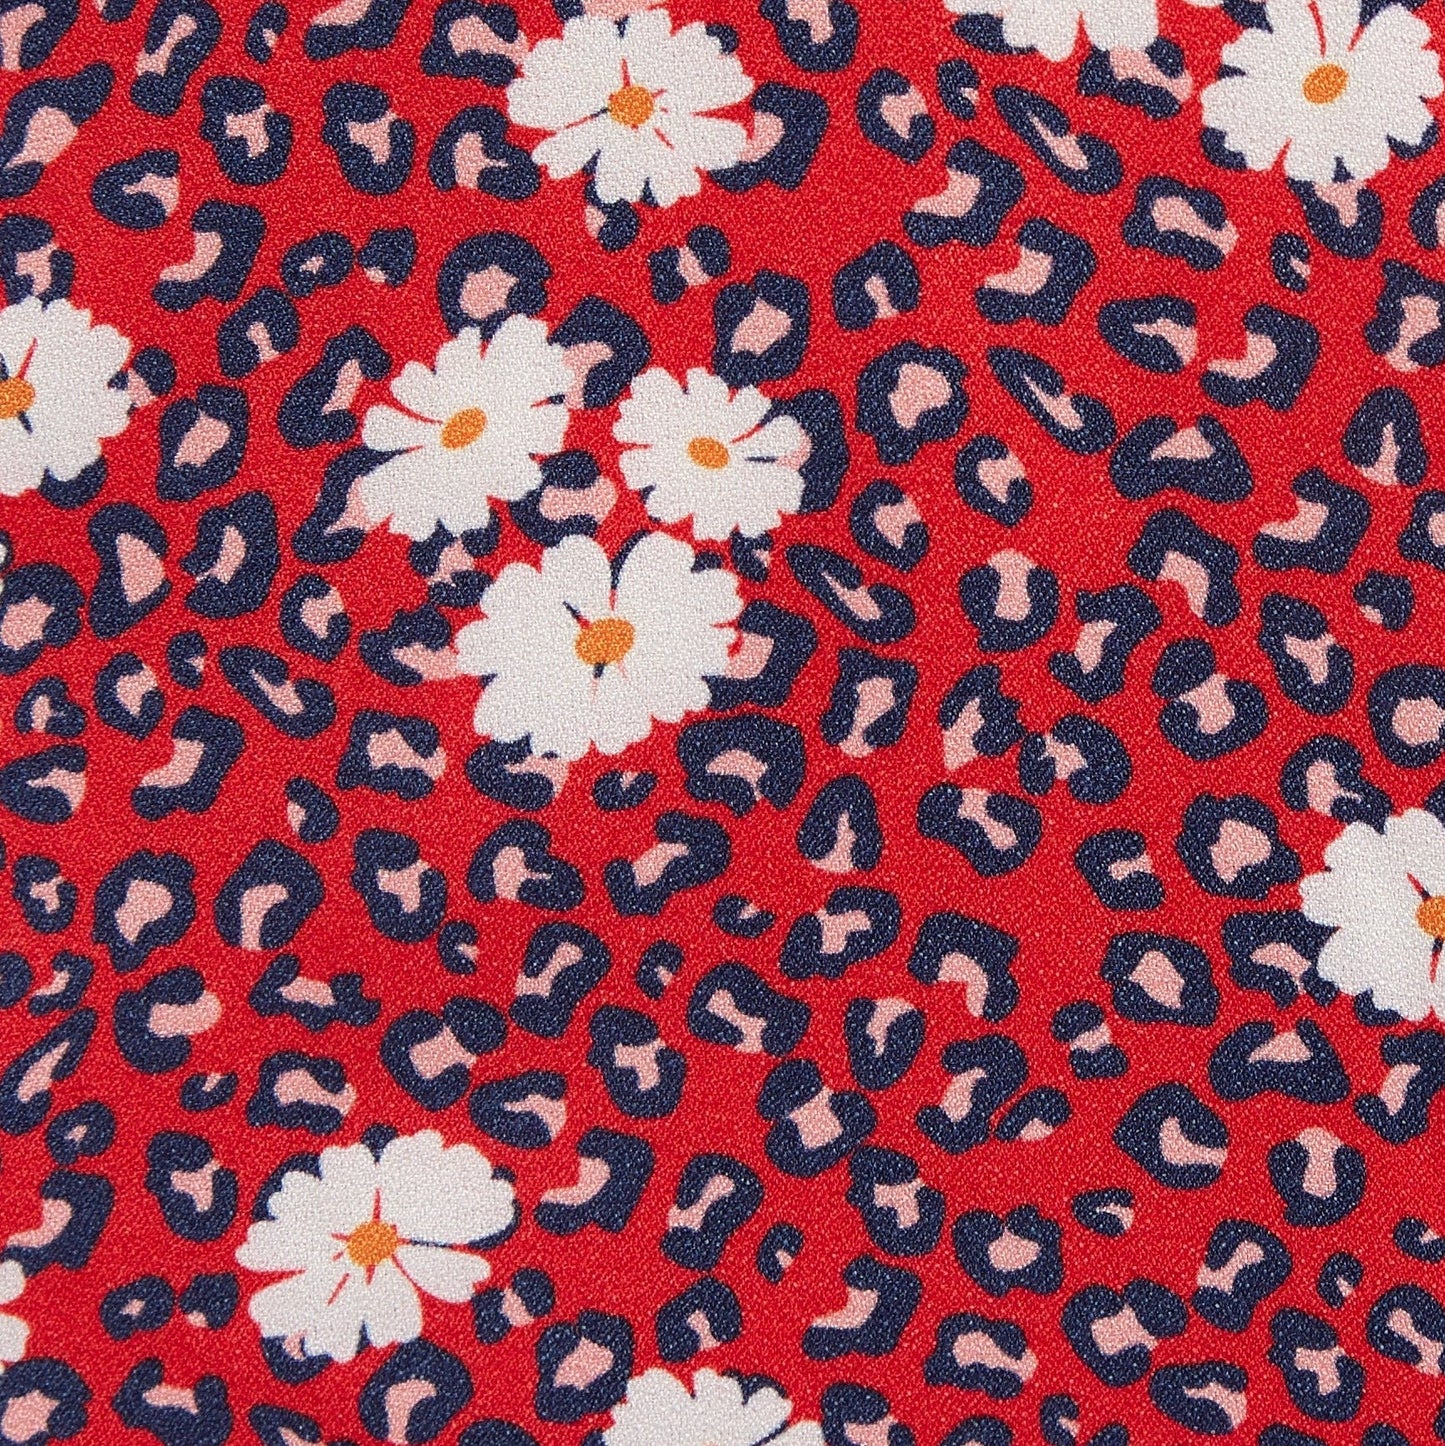 Louche Suzanne Roaring Daisy Print Long Sleeve Mini Dress - Red